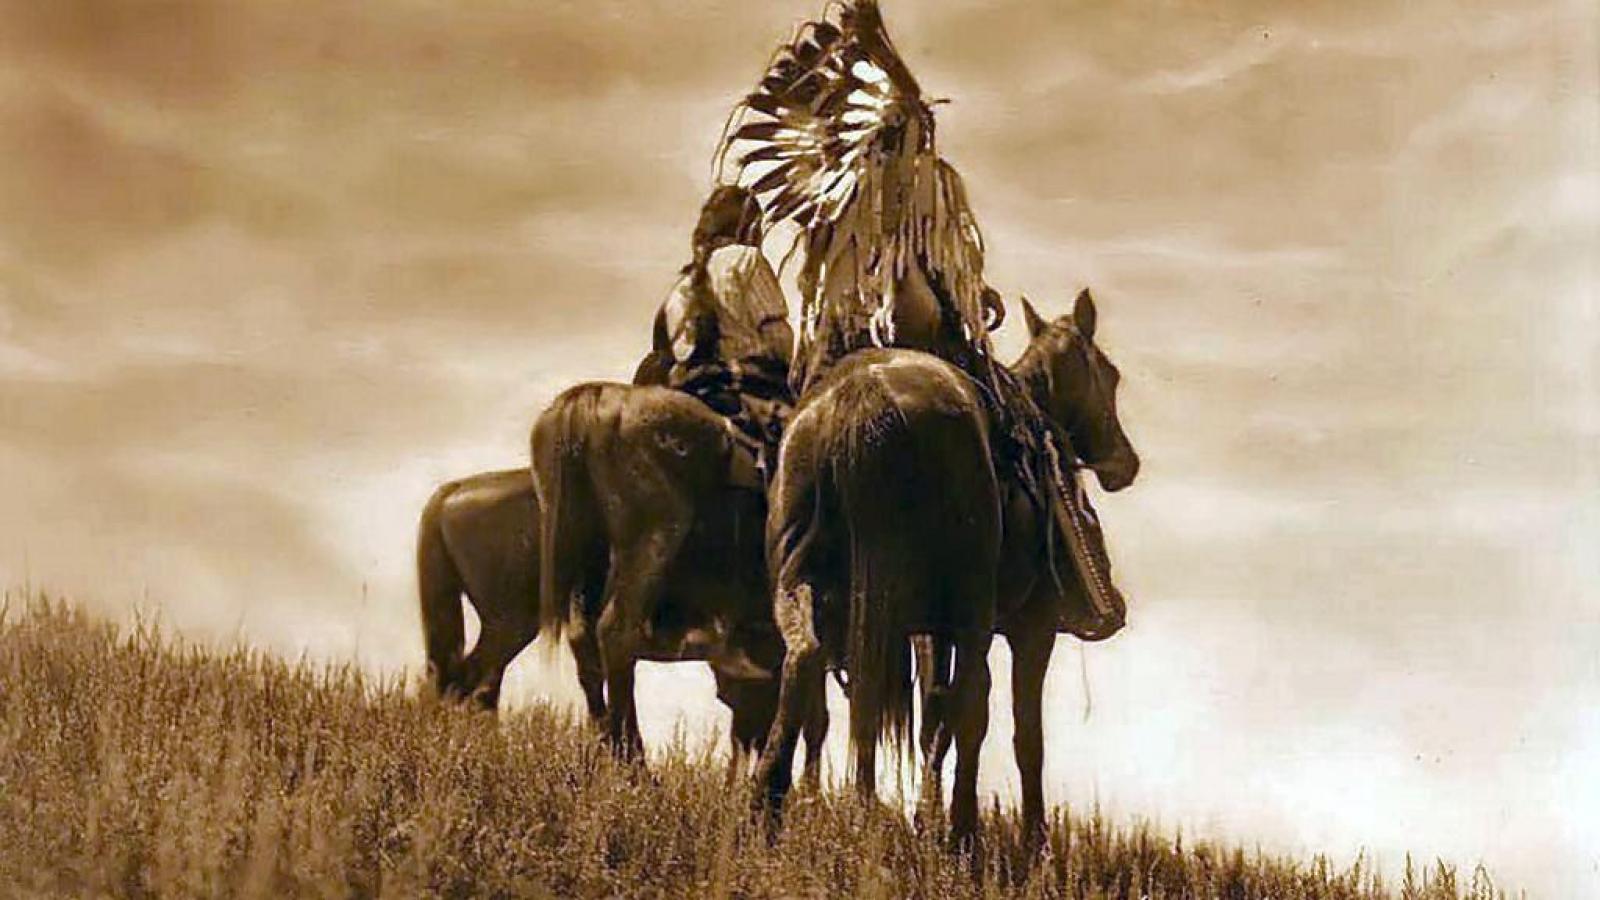 American Indian Wallpaper Hd - image #165